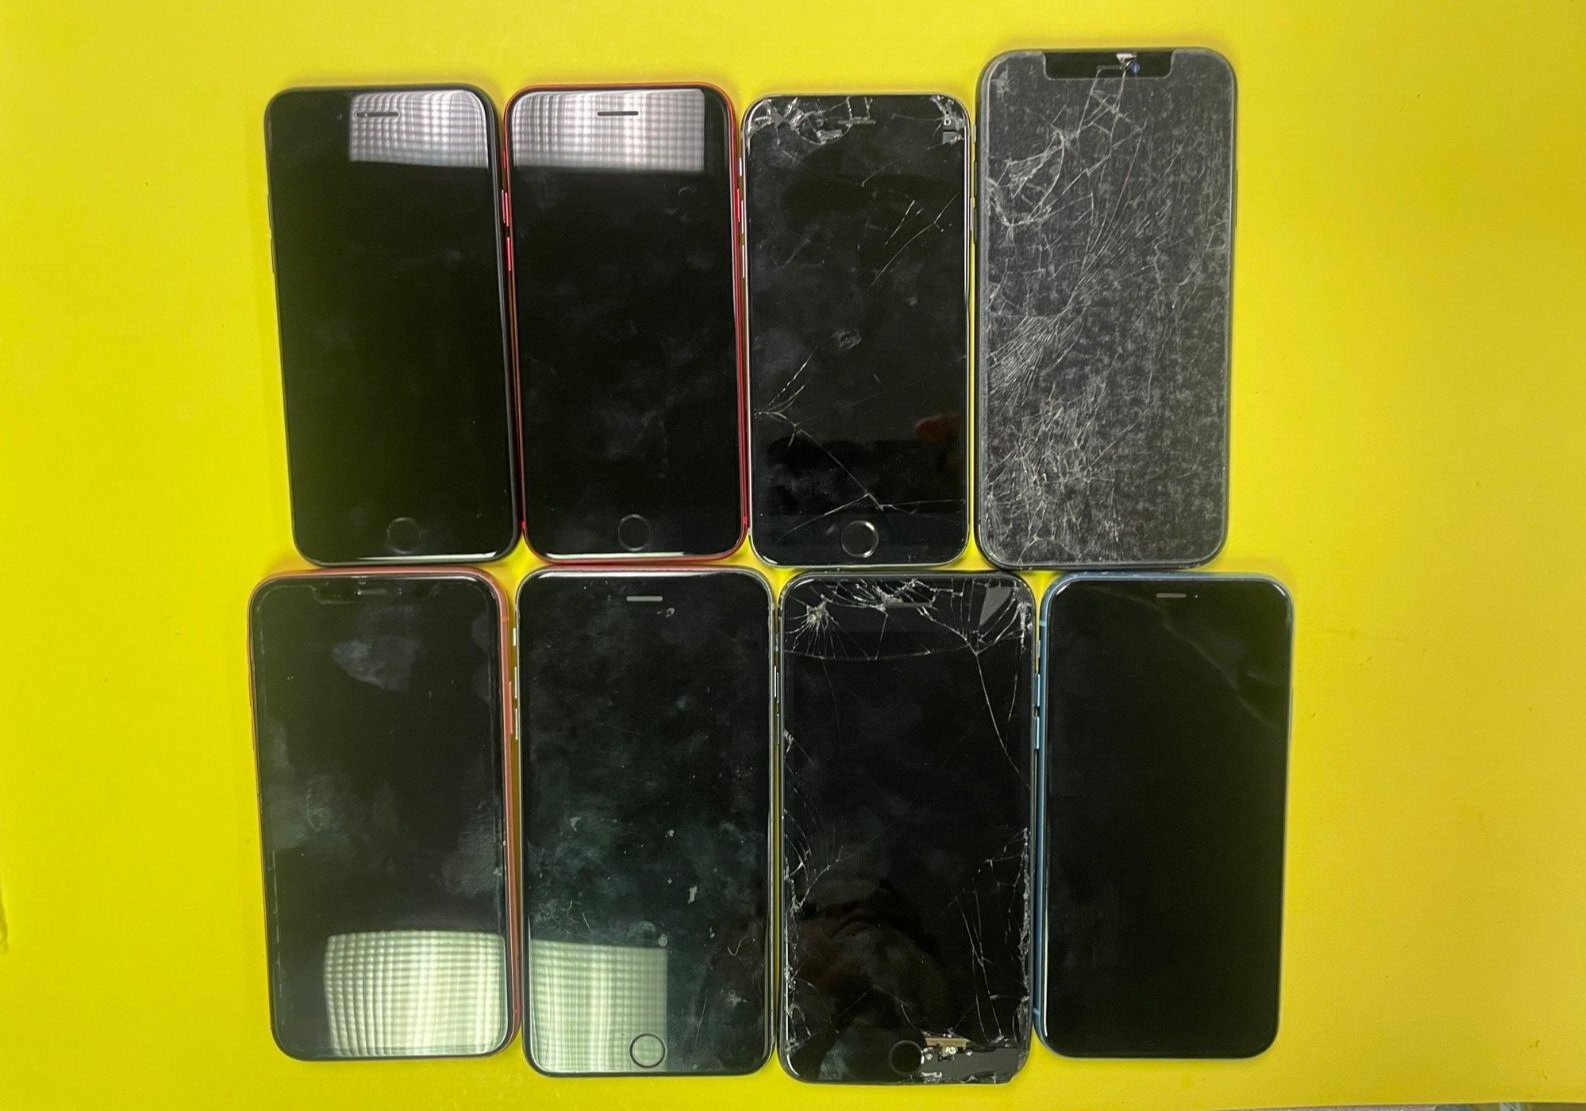 Apple iPhone 11, Xr, 8 Plus, SE 2nd, 6 - FMI Off - Broken - No Power - Lot of 8